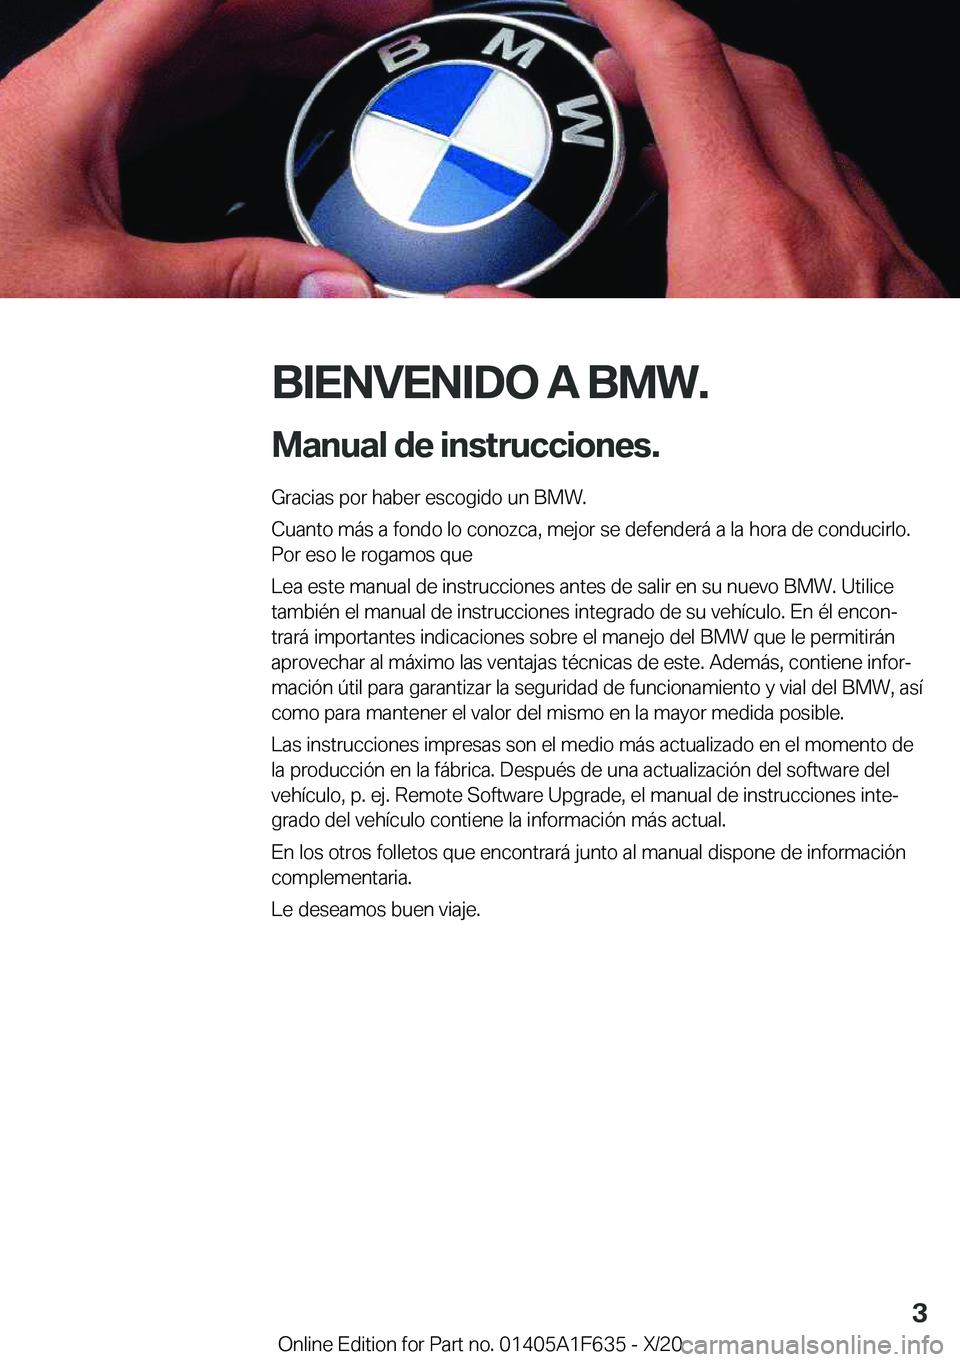 BMW X4 2021  Manuales de Empleo (in Spanish) �B�I�E�N�V�E�N�I�D�O��A��B�M�W�.
�M�a�n�u�a�l��d�e��i�n�s�t�r�u�c�c�i�o�n�e�s�. �G�r�a�c�i�a�s��p�o�r��h�a�b�e�r��e�s�c�o�g�i�d�o��u�n��B�M�W�.
�C�u�a�n�t�o��m�